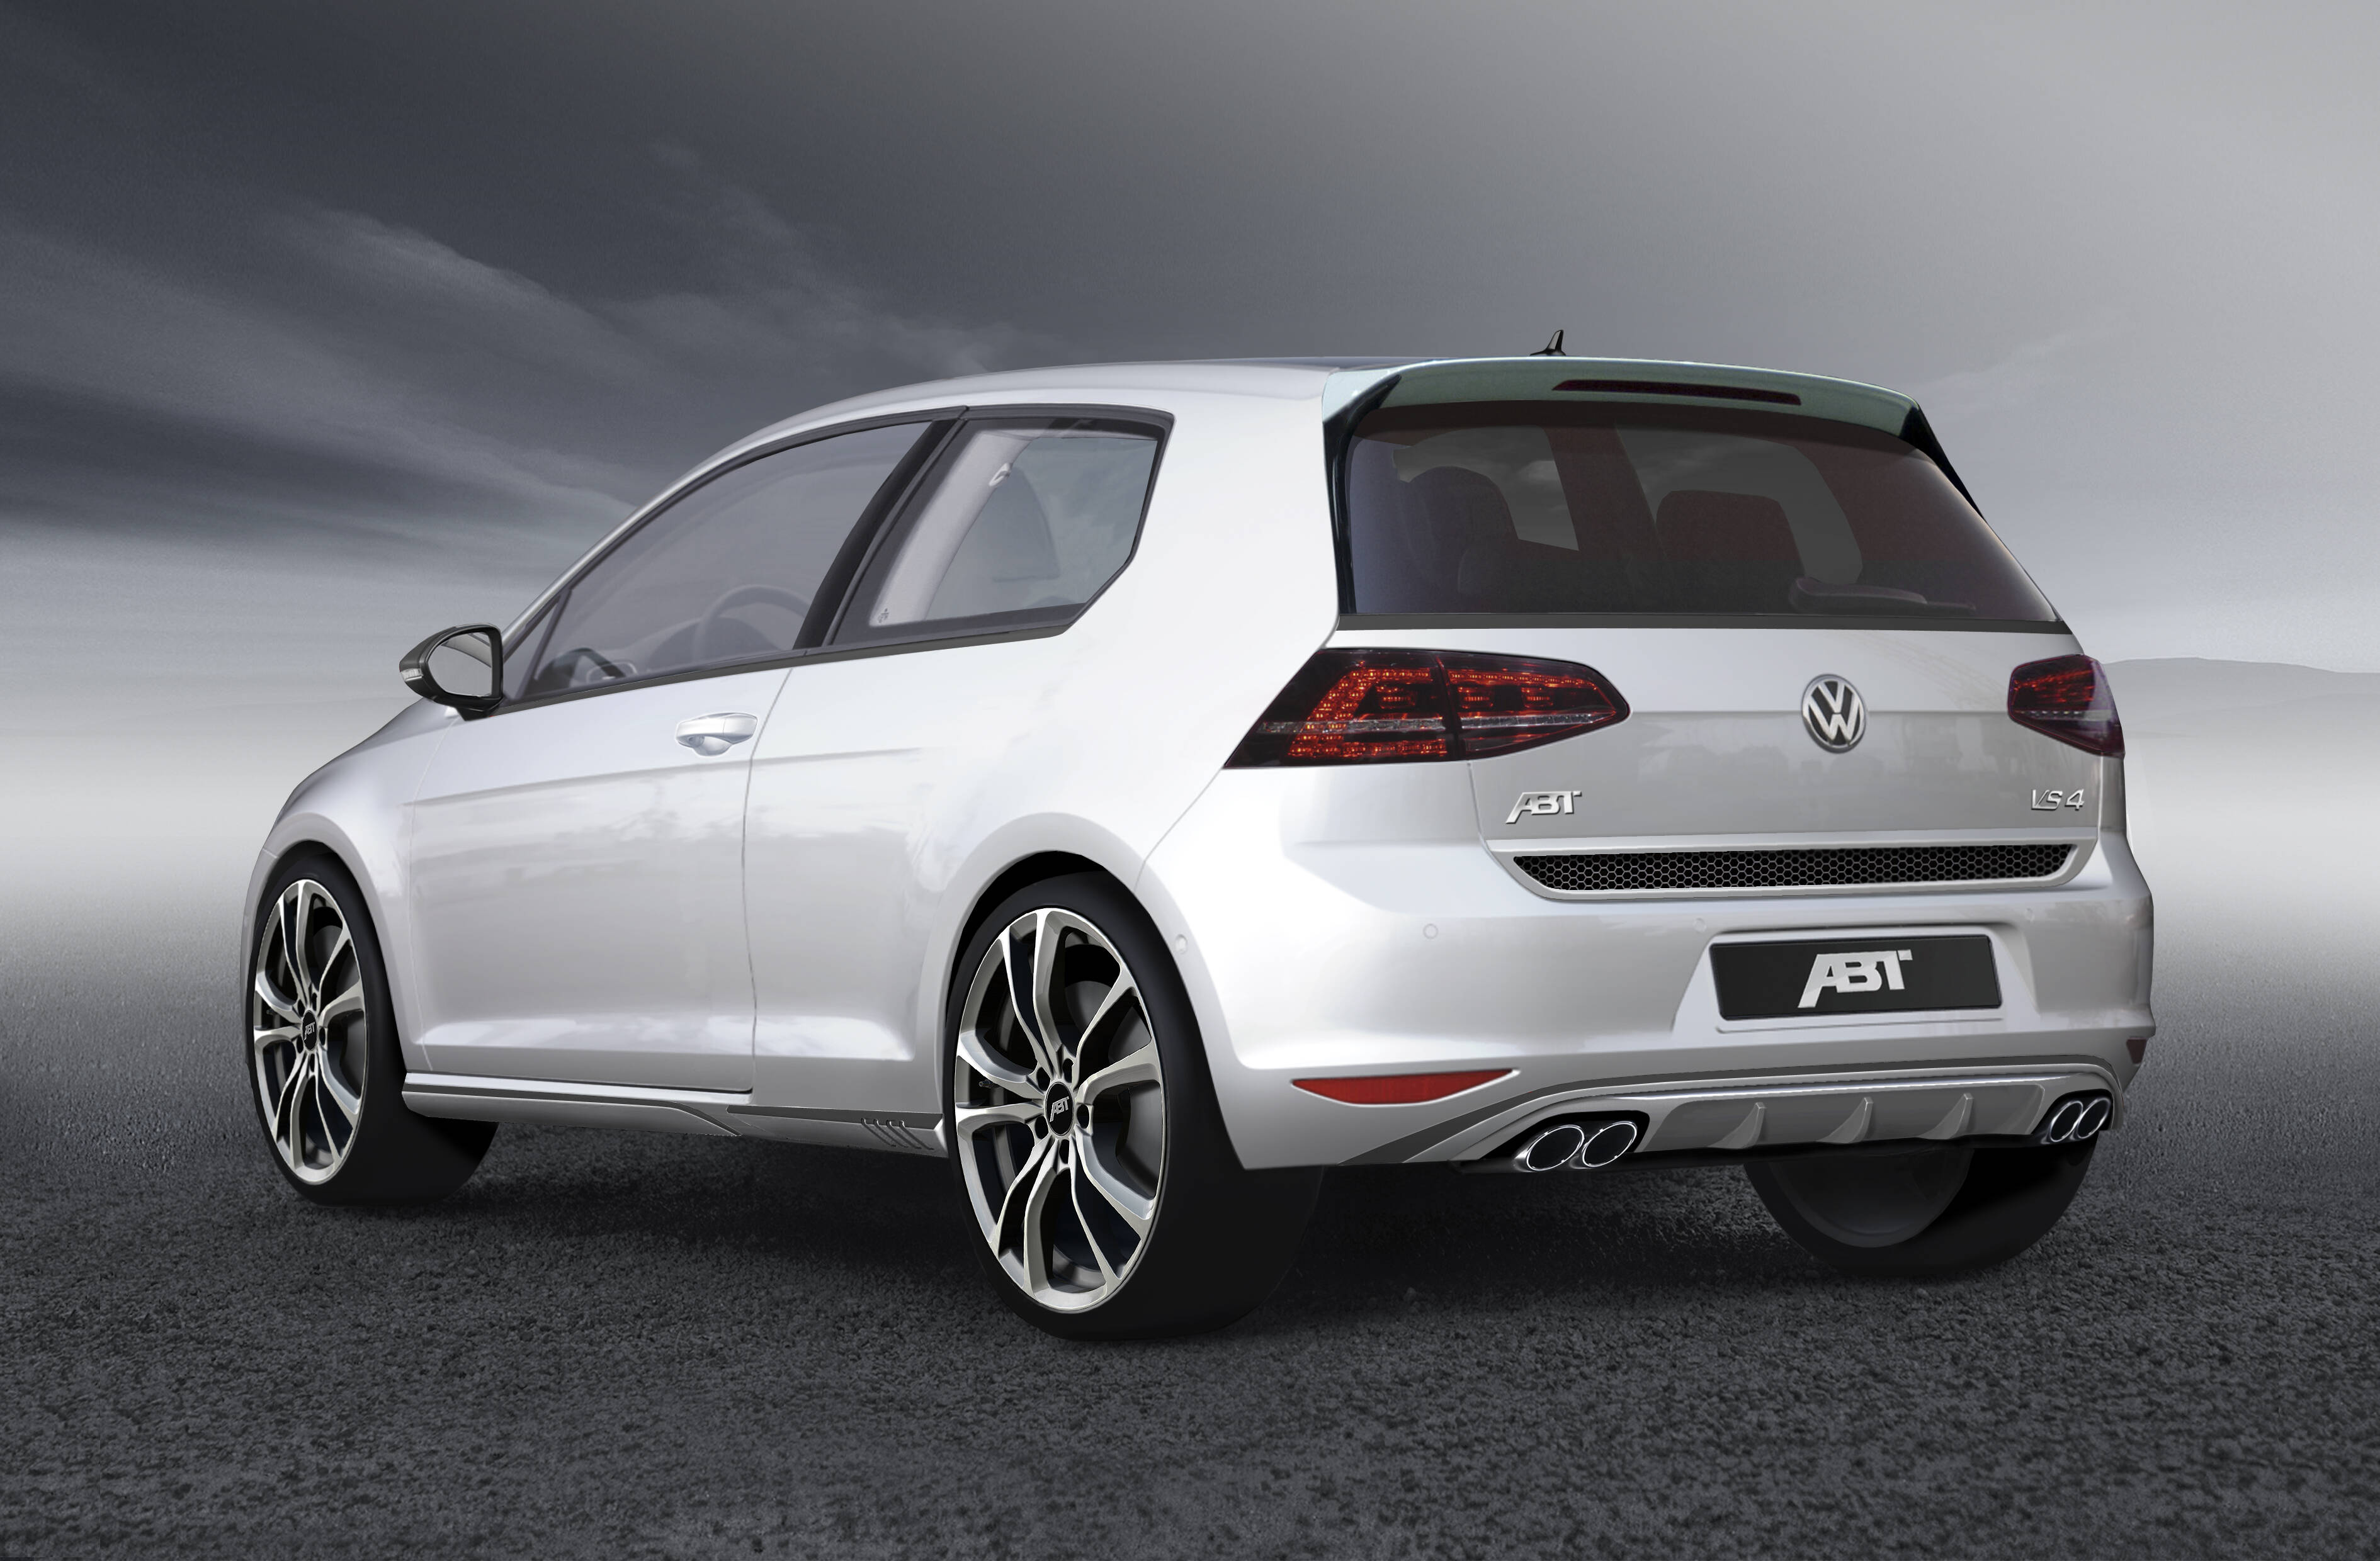 The new ABT Golf VII GTD – great top diesel - Audi Tuning, VW Tuning, Chiptuning von Sportsline.